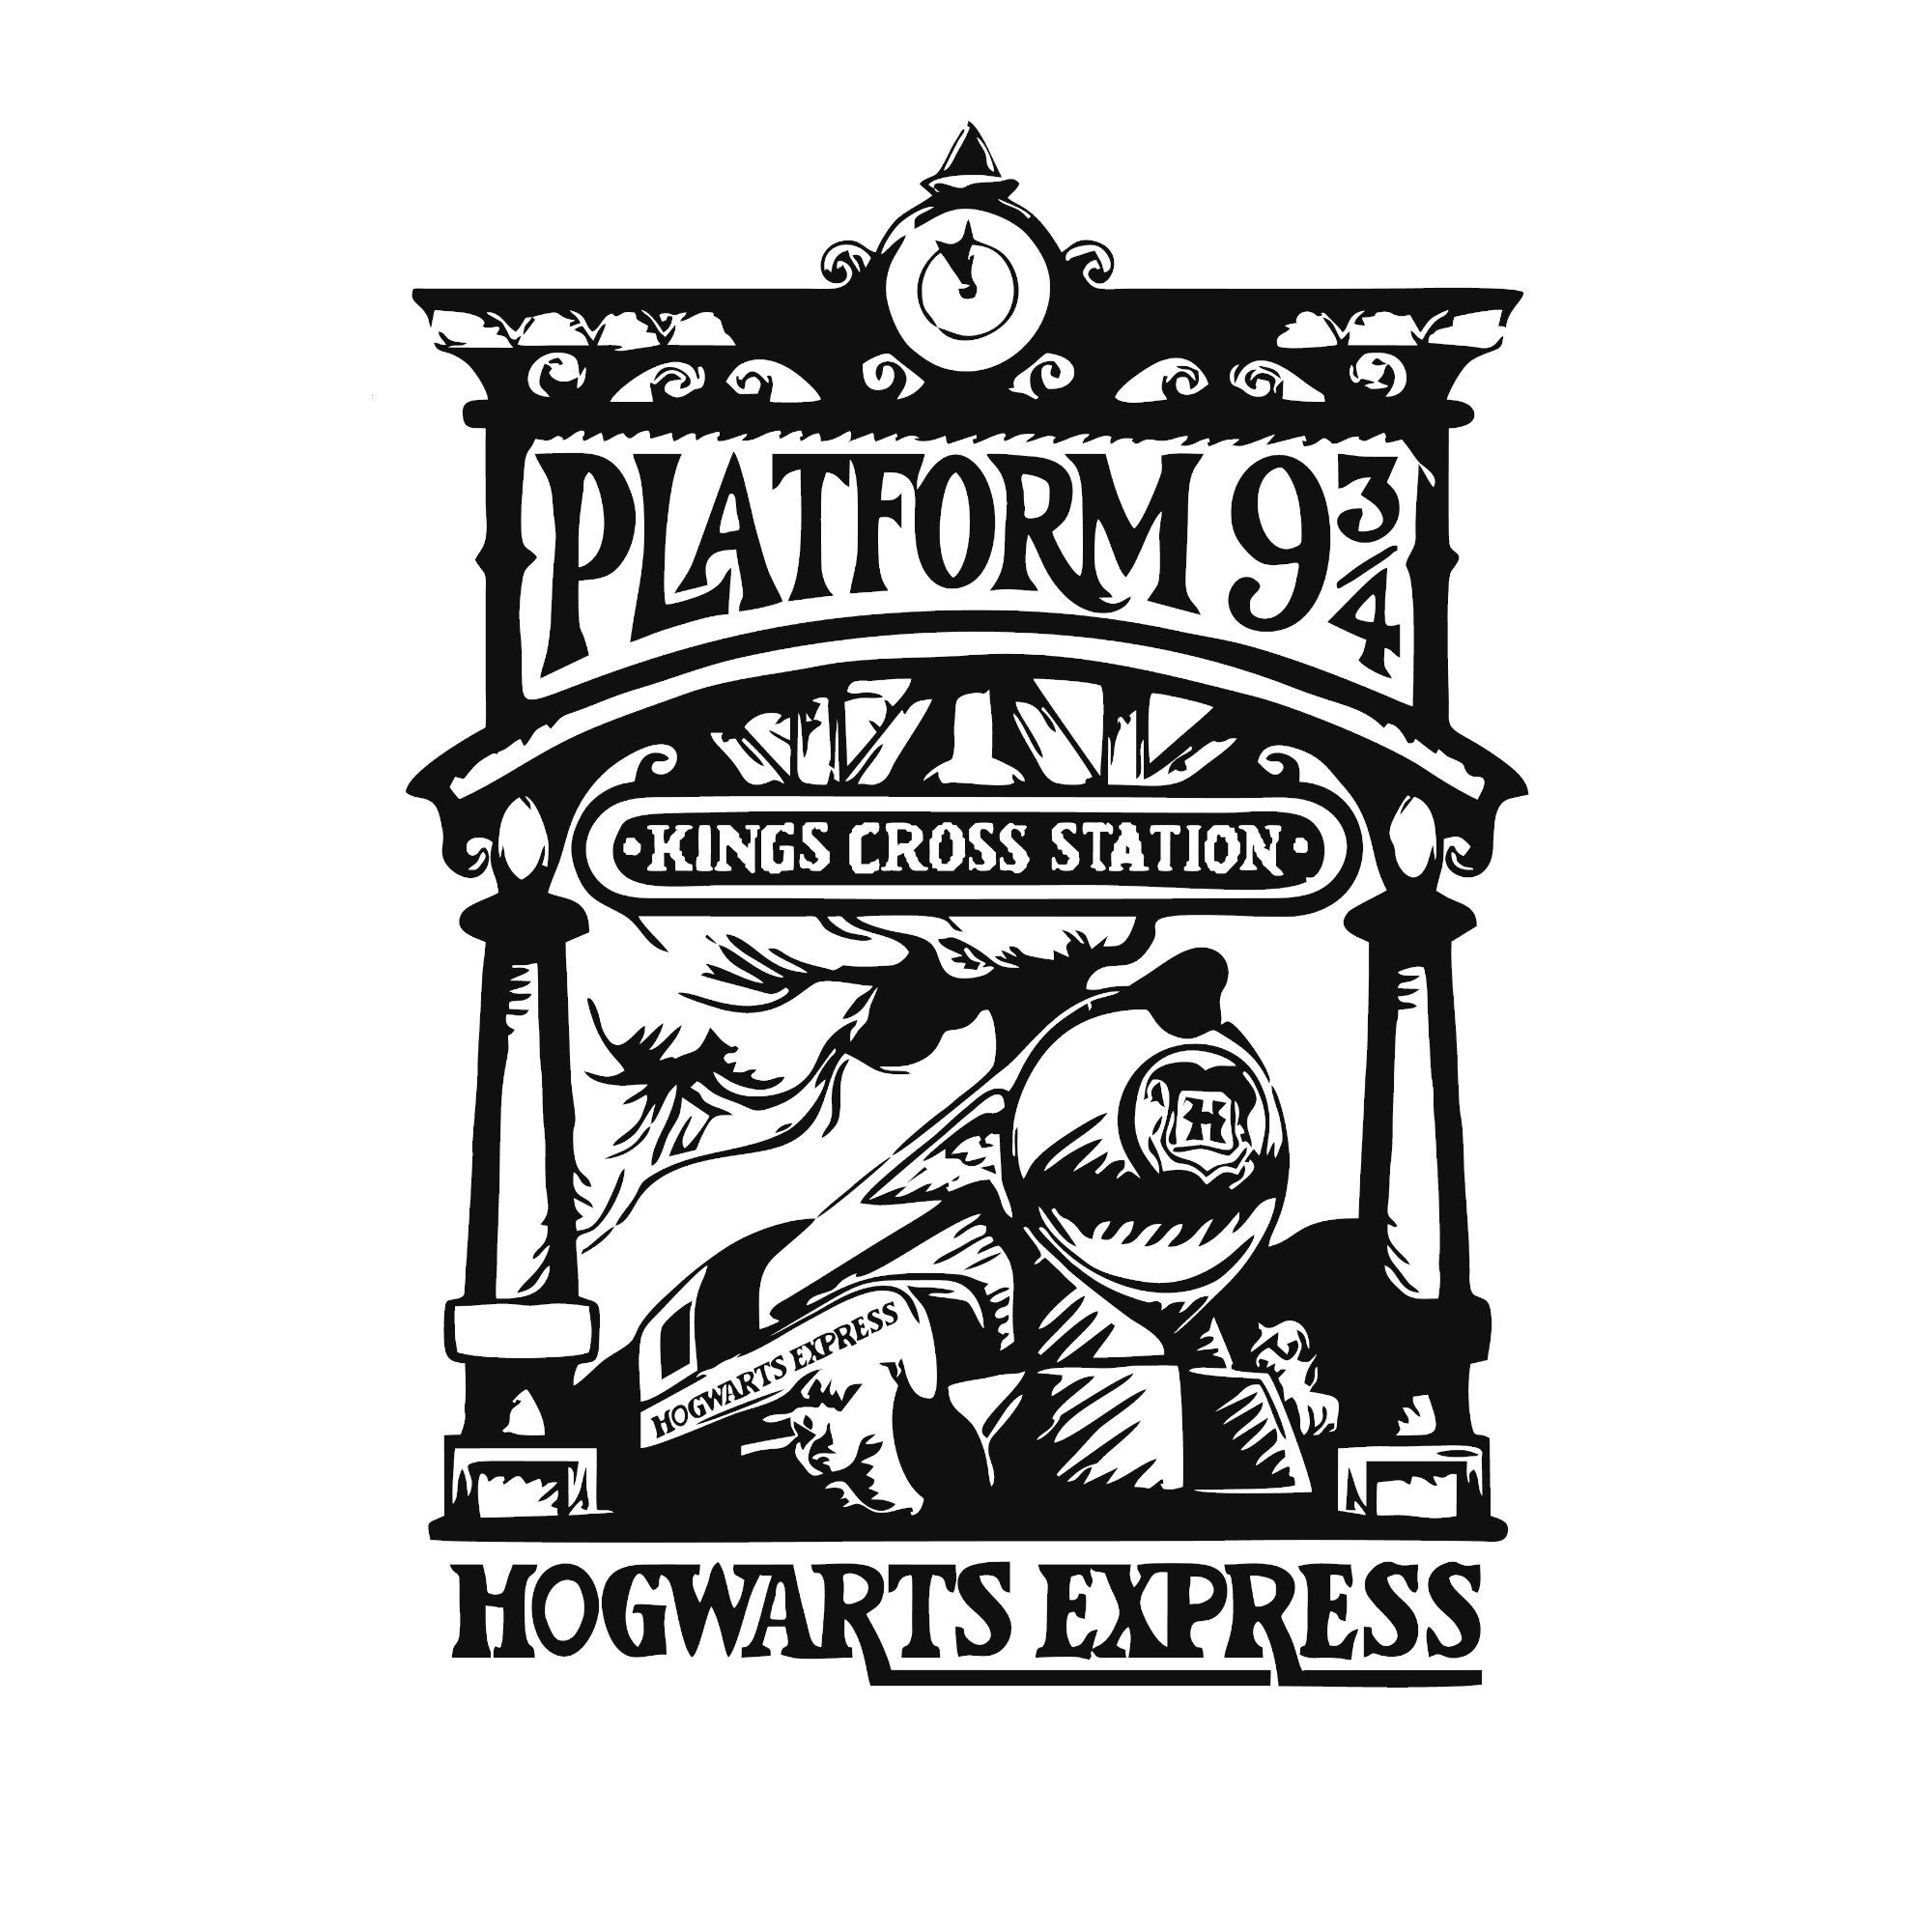 Harry Potter - Hogwarts Express